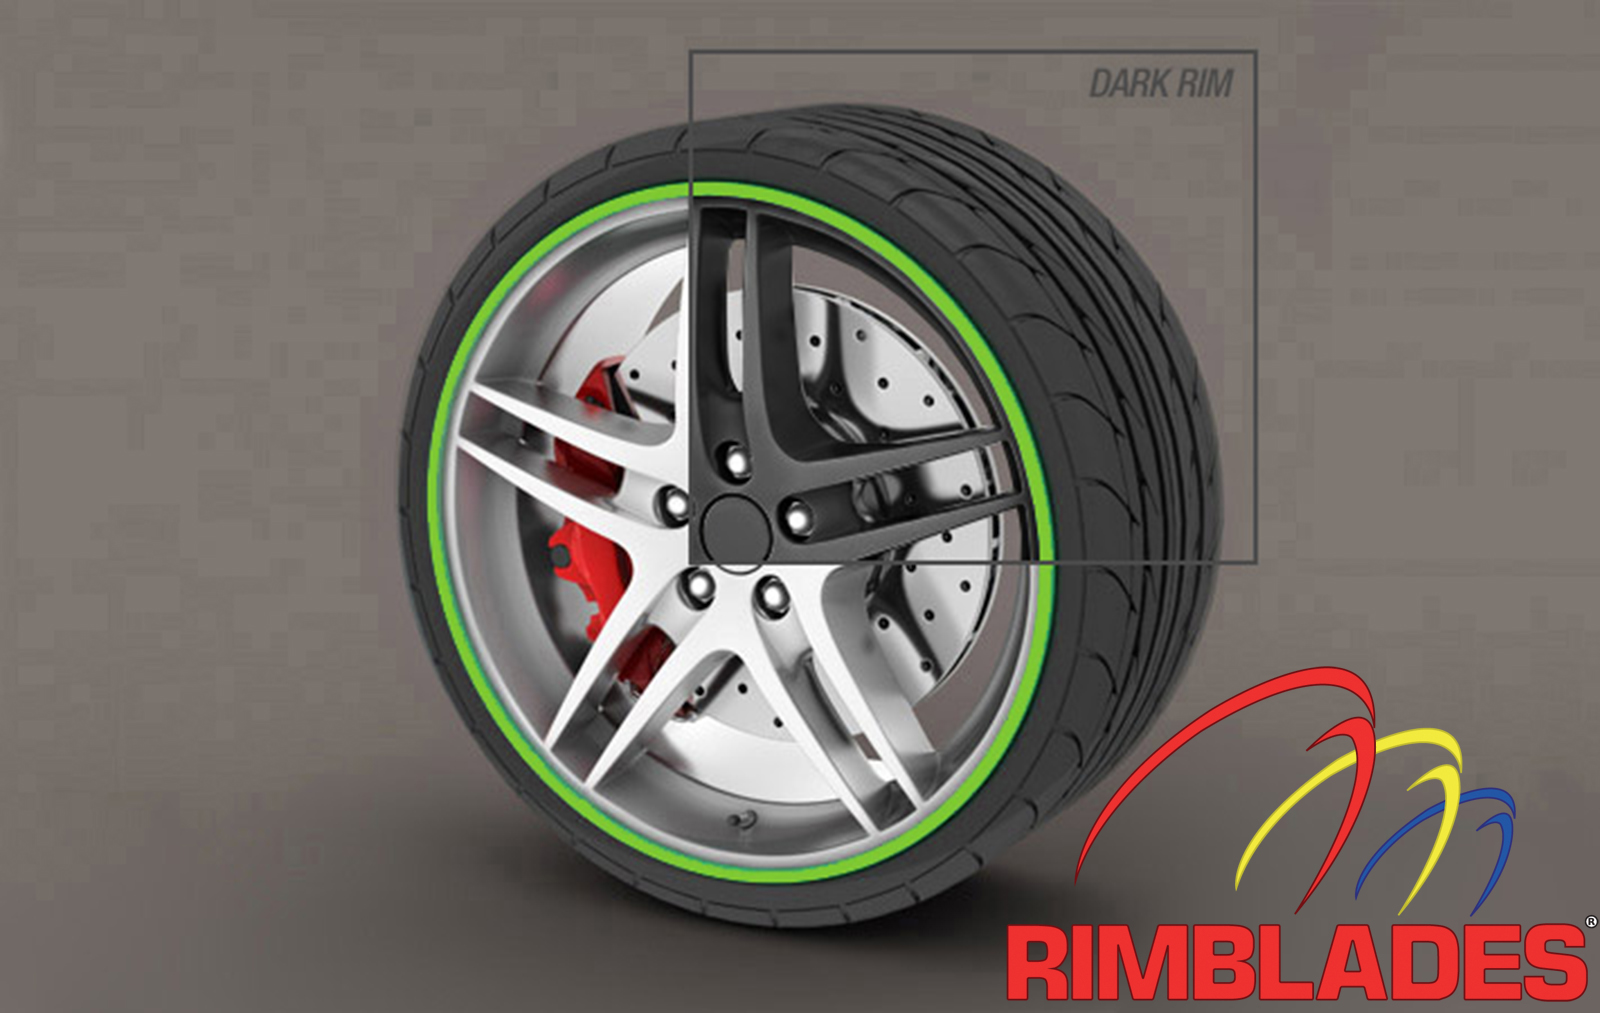 RimBlades USA (Black) Wheel Rim Protectors Guard Alloy Wheel from Curb Rash  – Set of 4 Rim Protectors Easy to Install